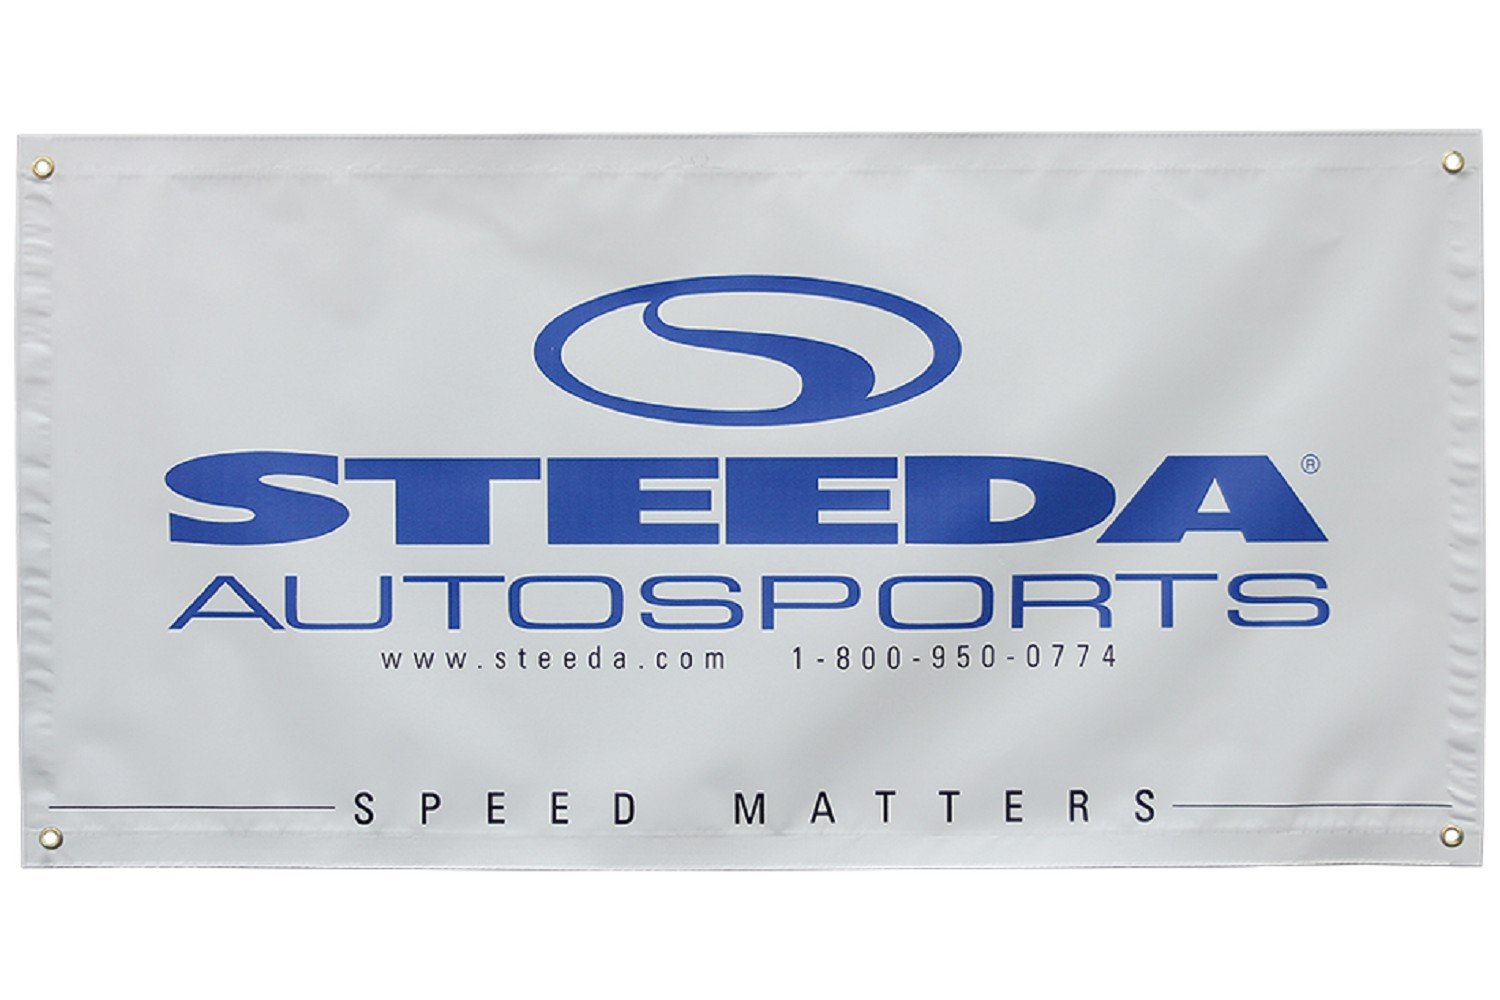 Baner warsztatowy Steeda Autosports